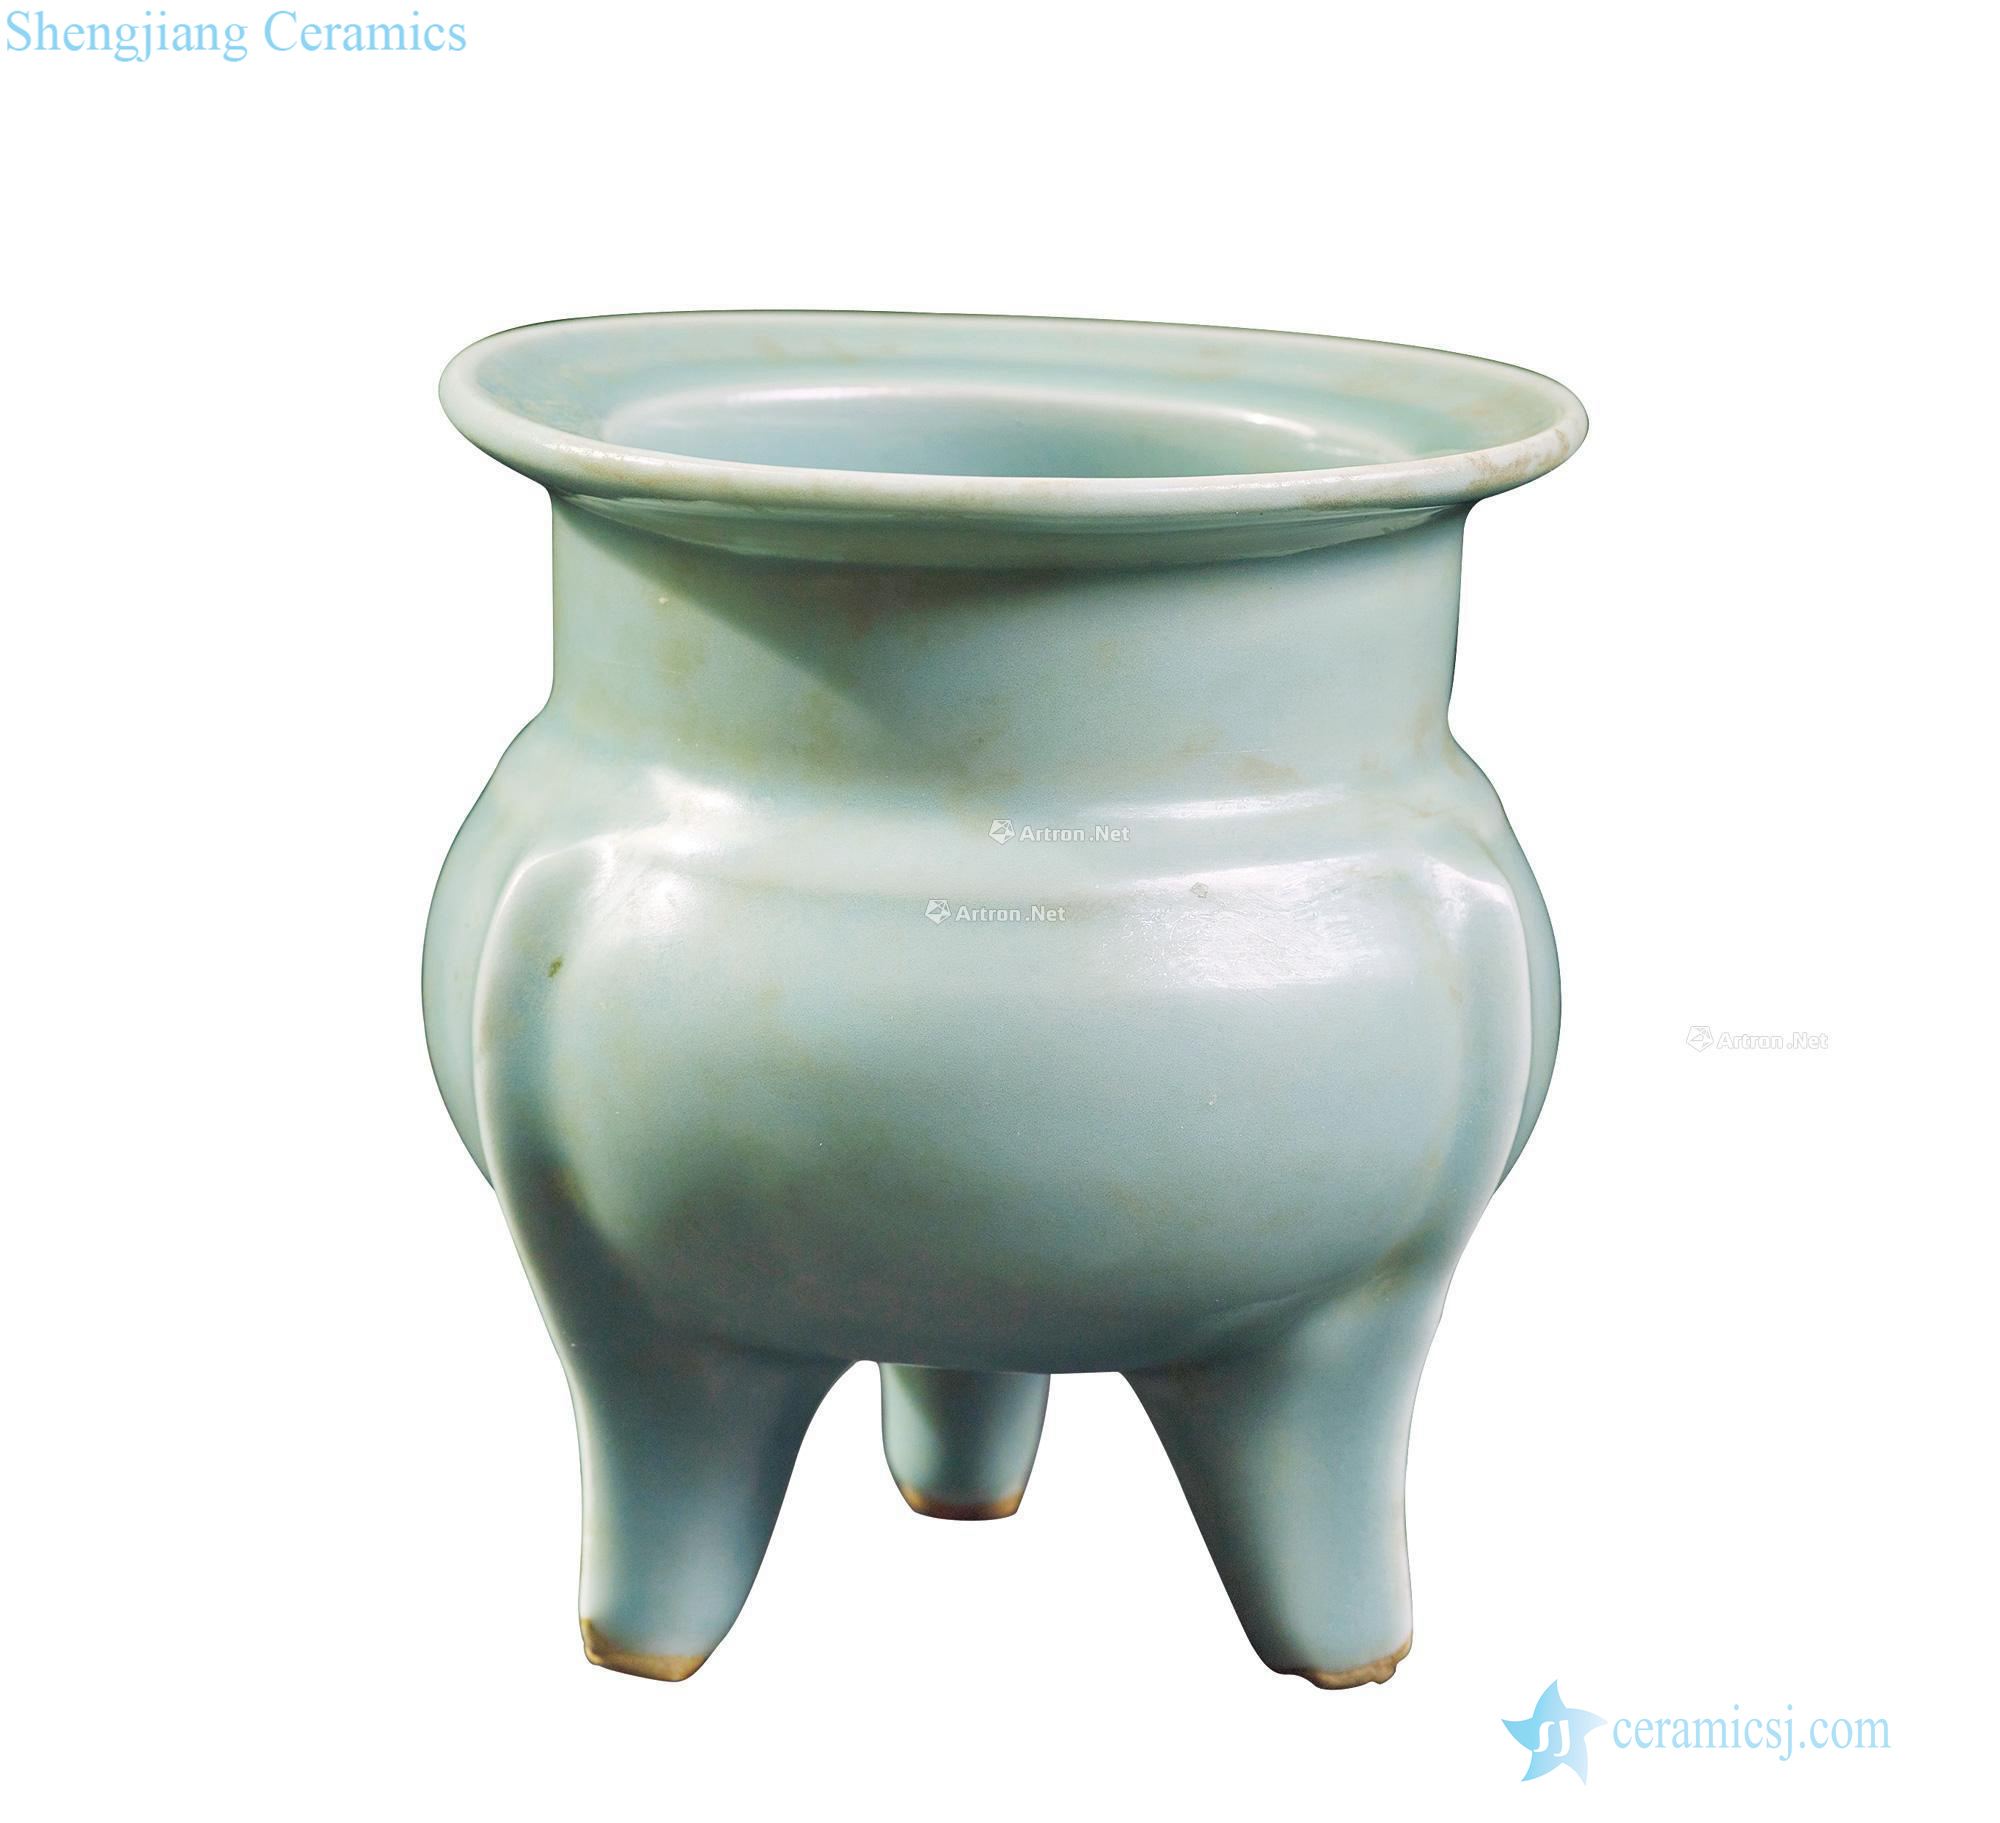 The yuan dynasty Longquan celadon azure glaze three-legged incense burner